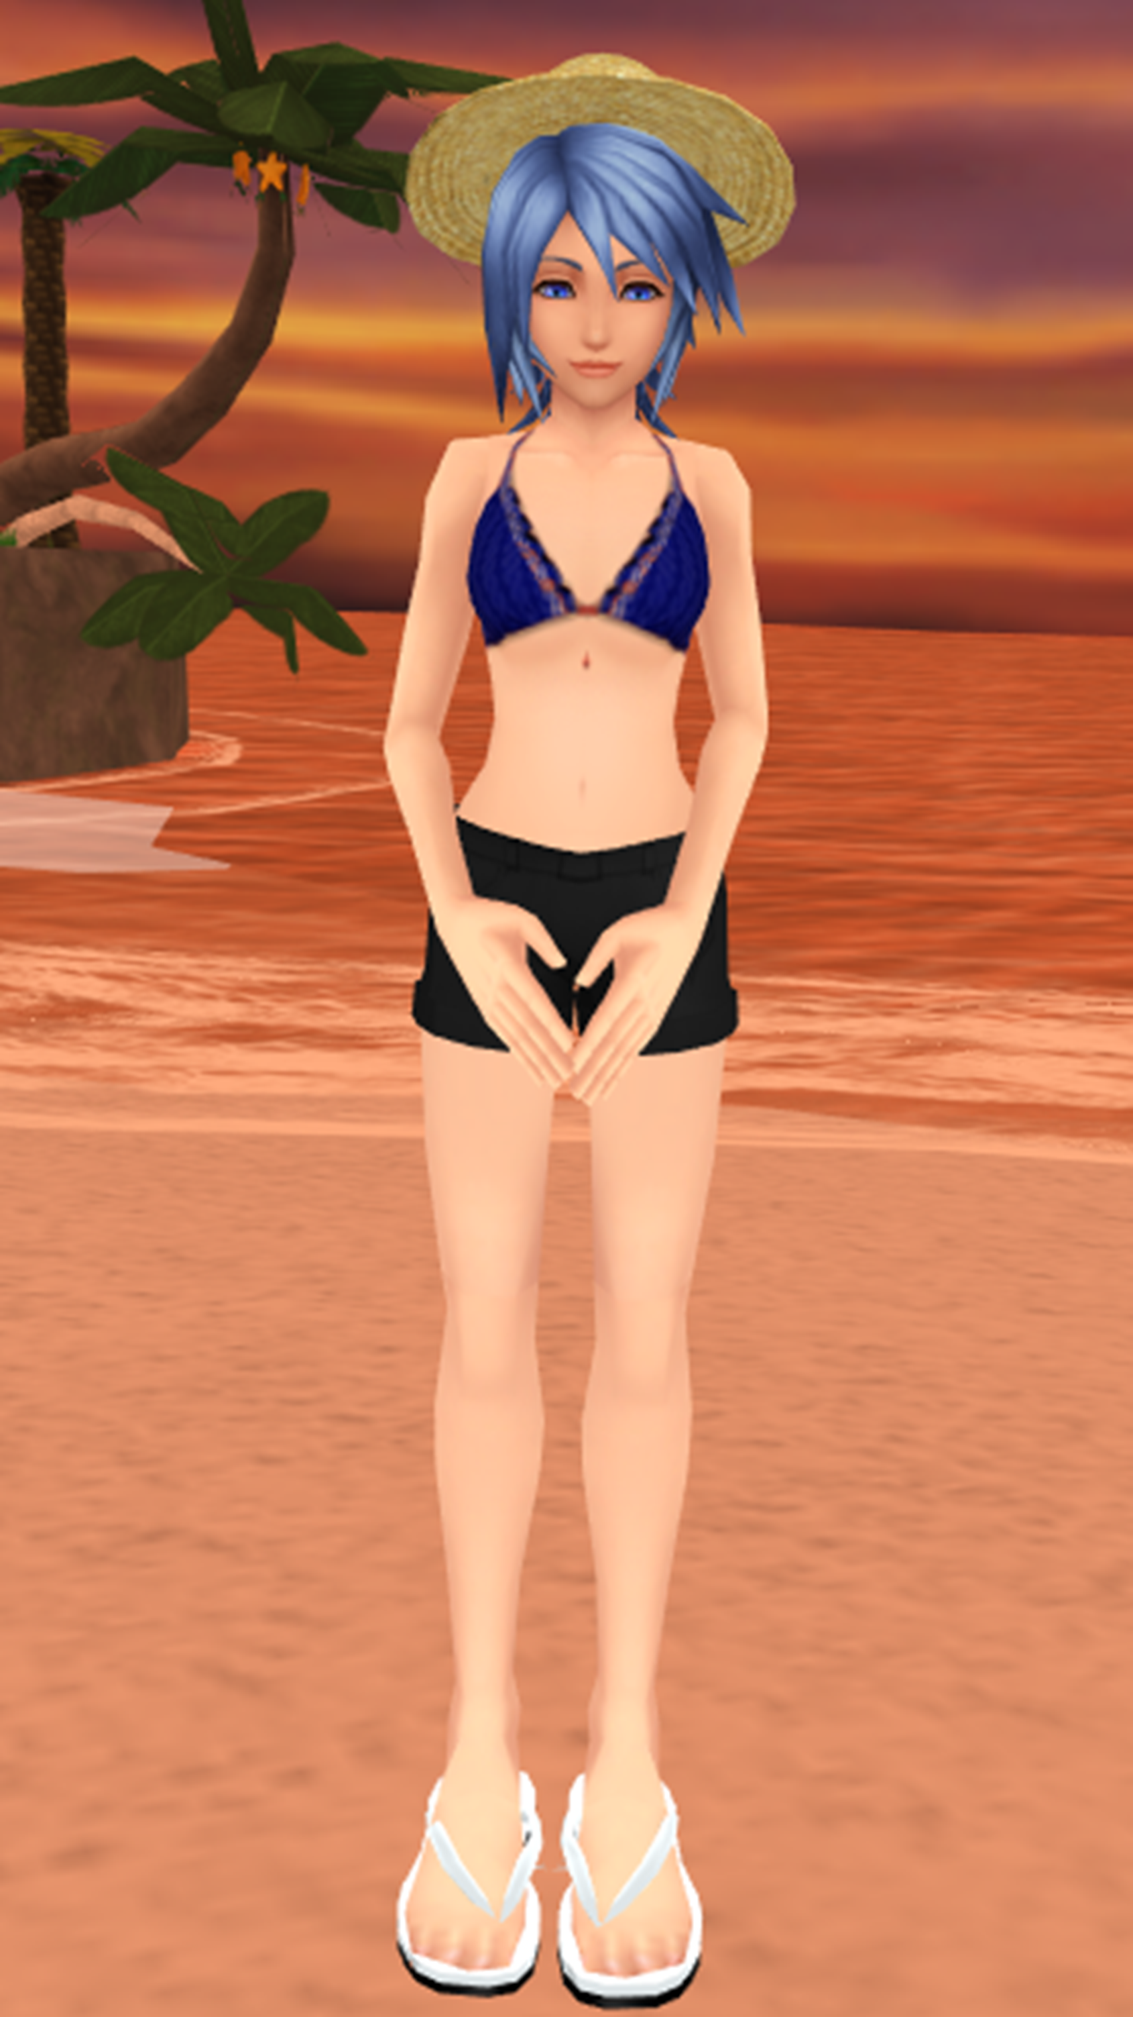 Aqua is Sexy Summer Outfit Style - Kingdom Hearts: Aqua Photo (39983066